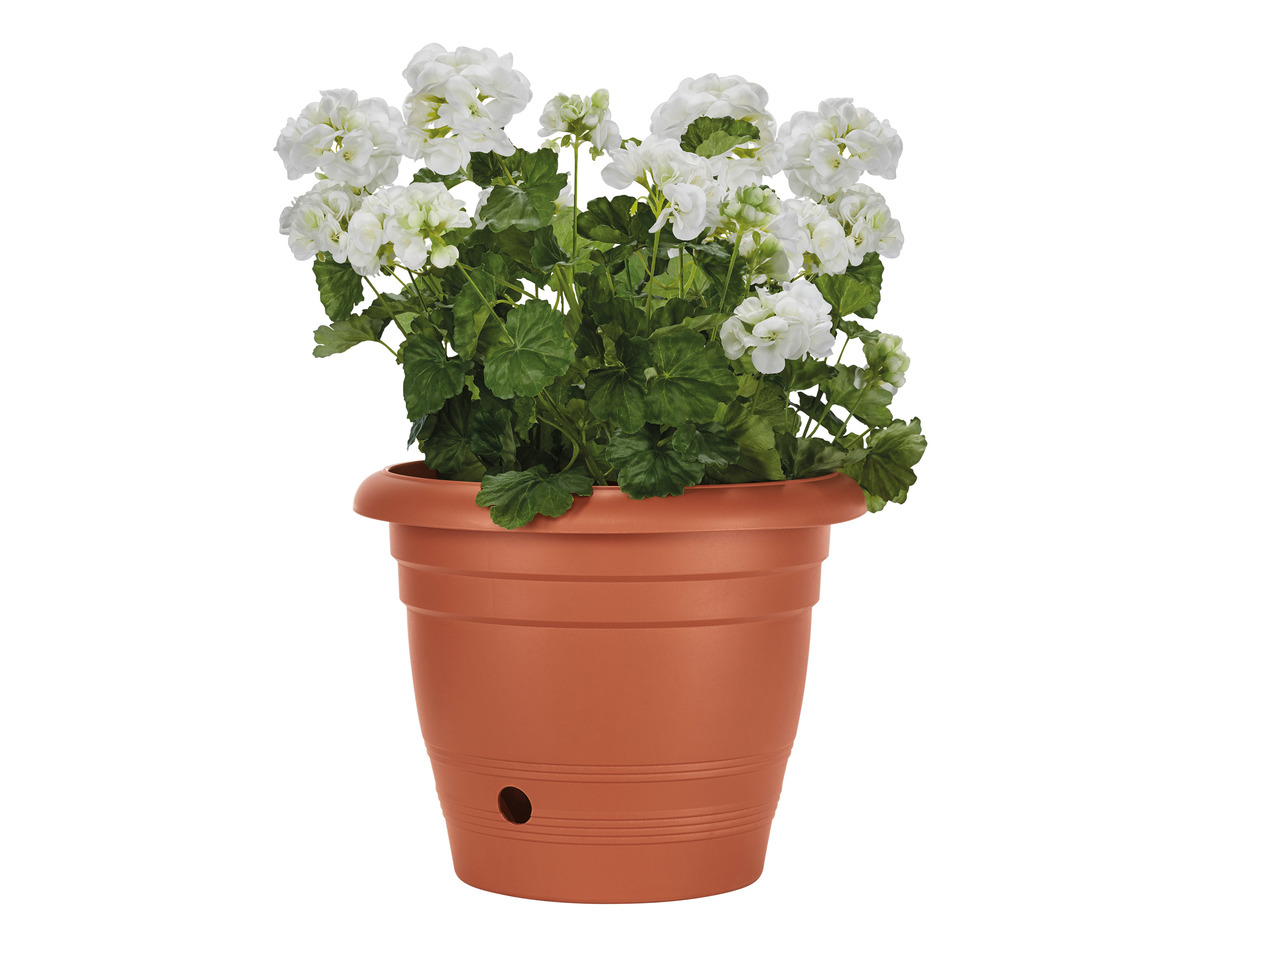 Florabest Self-Watering Plant Pot1